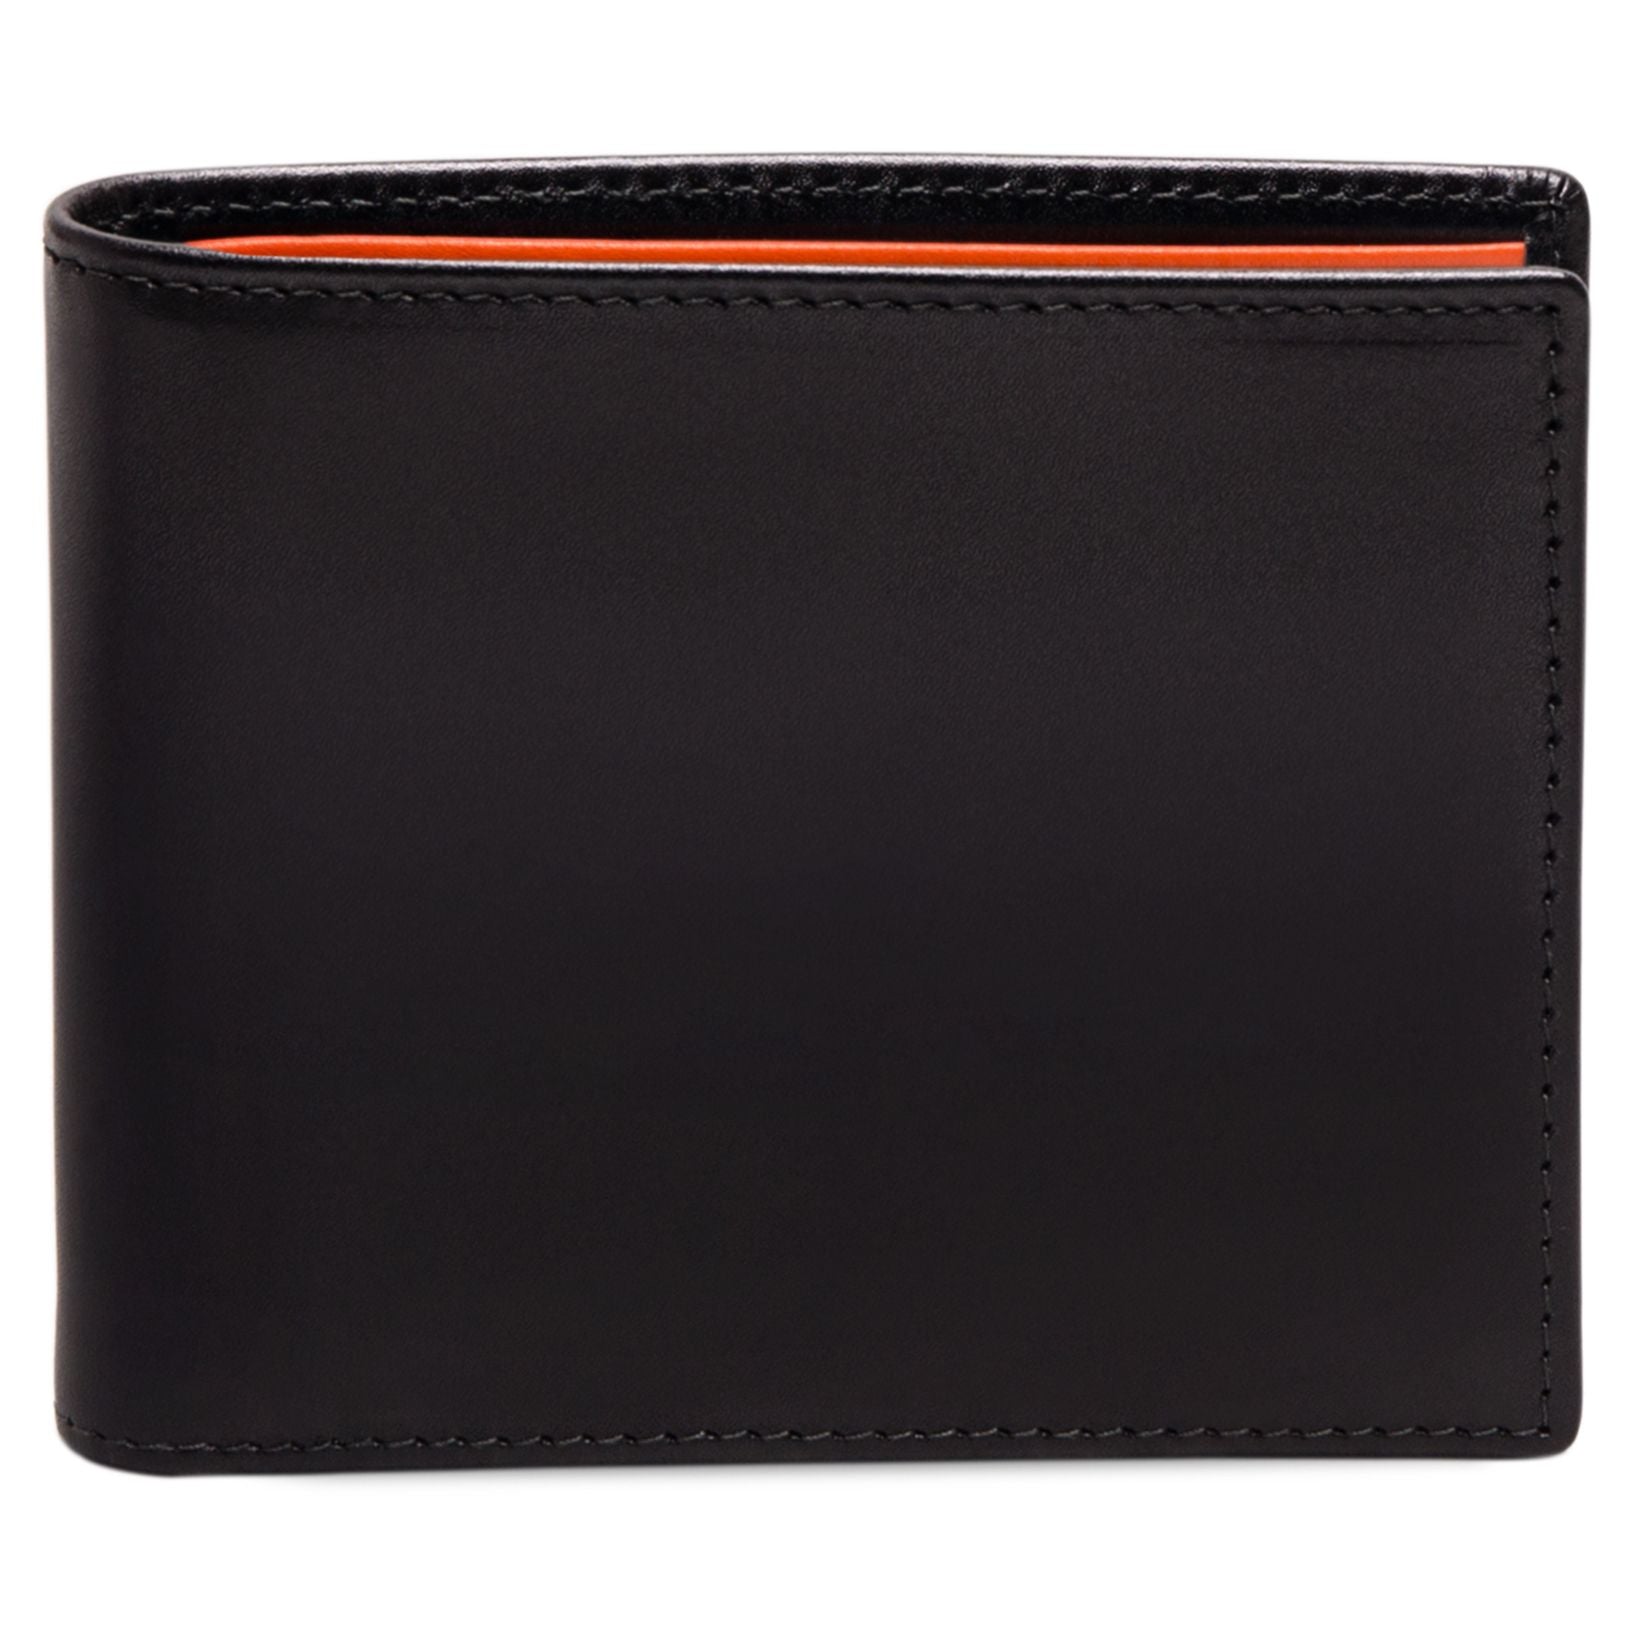 Ettinger Sterling Collection Billfold with 12 Credit Card Slips, Black/Orange